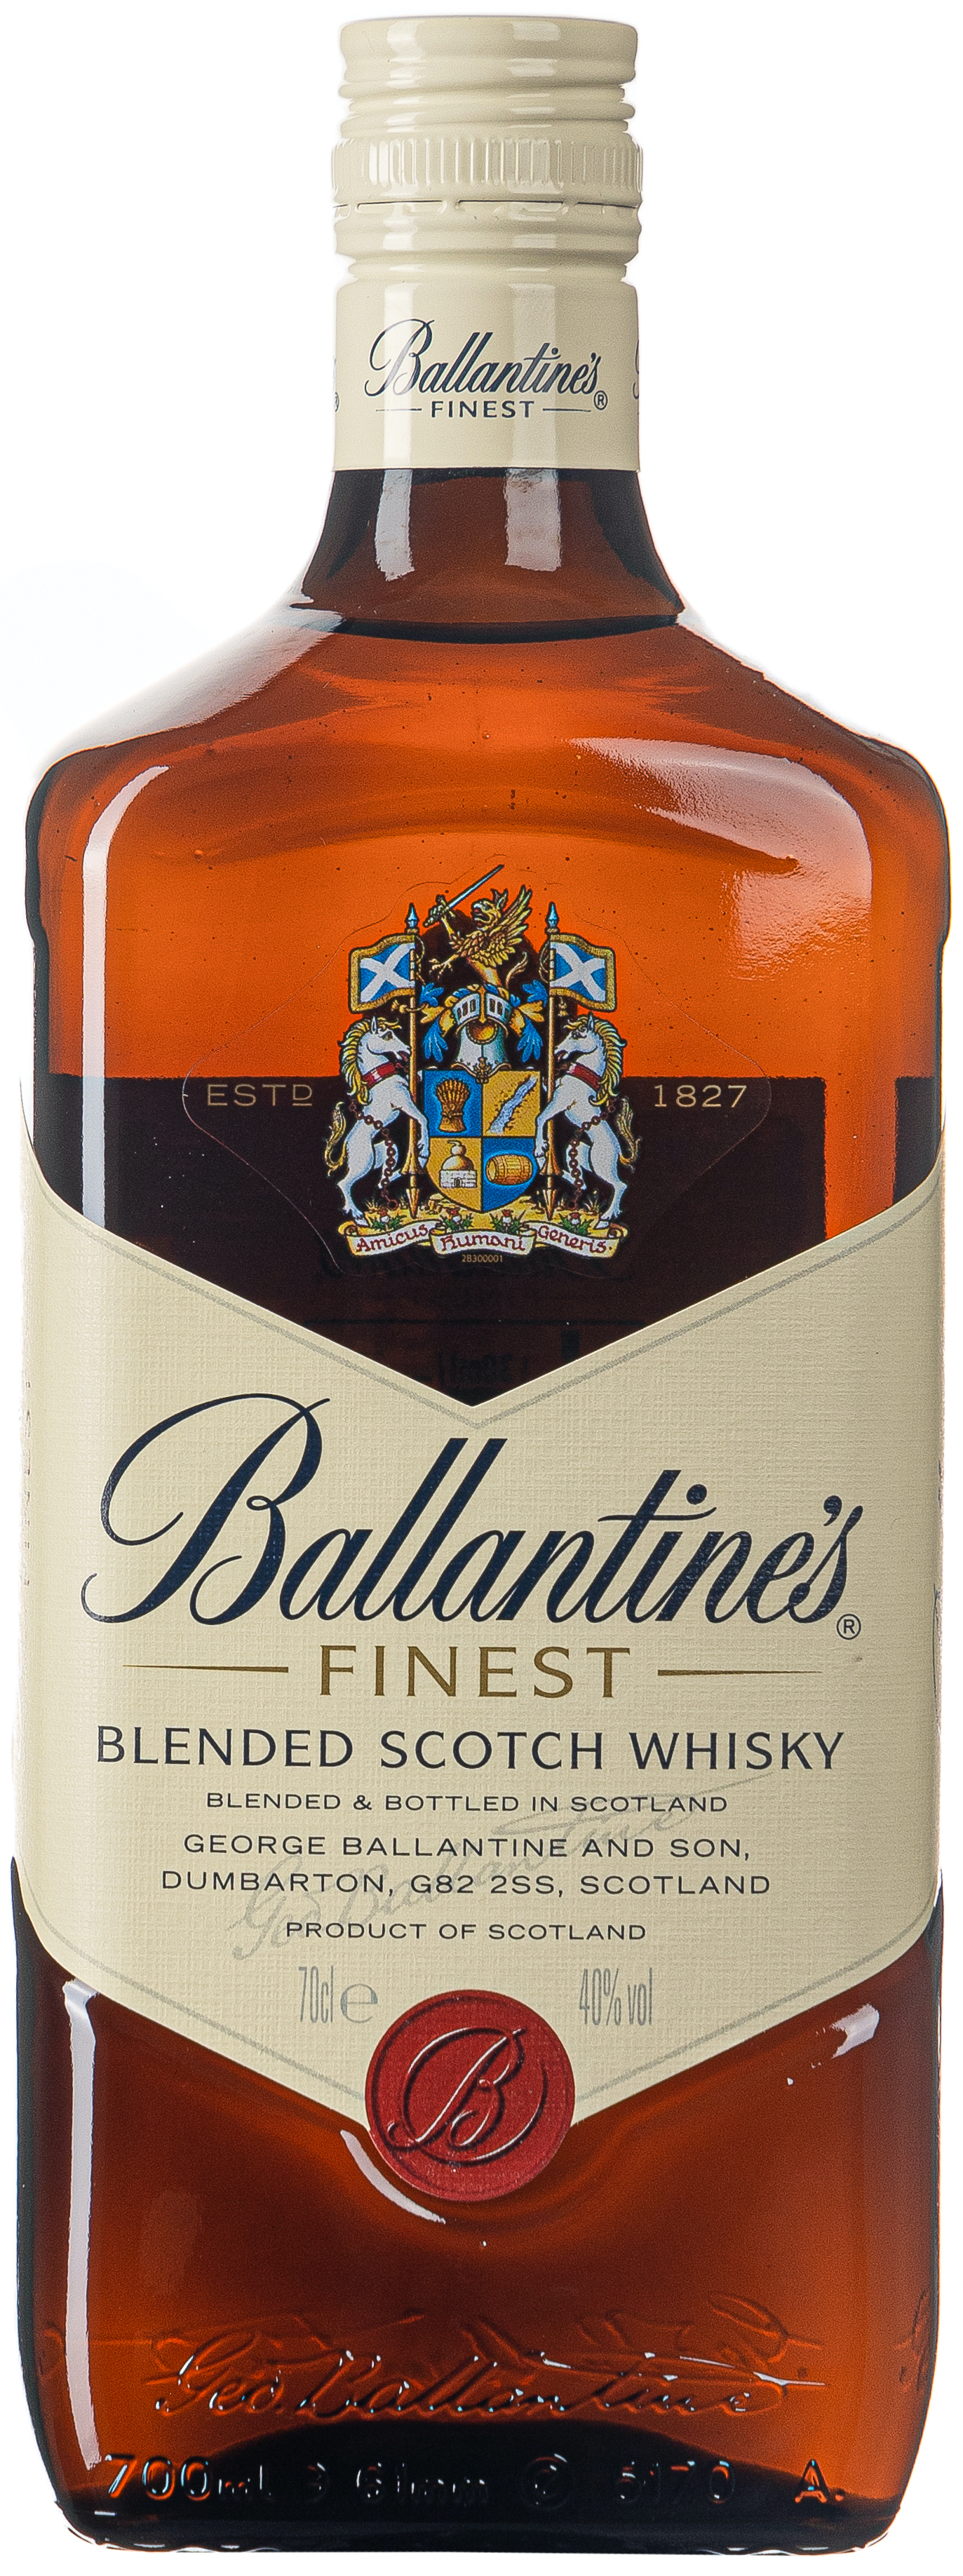 Ballantines Finest Blended Scotch Whisky 40%vol. 0,7 L